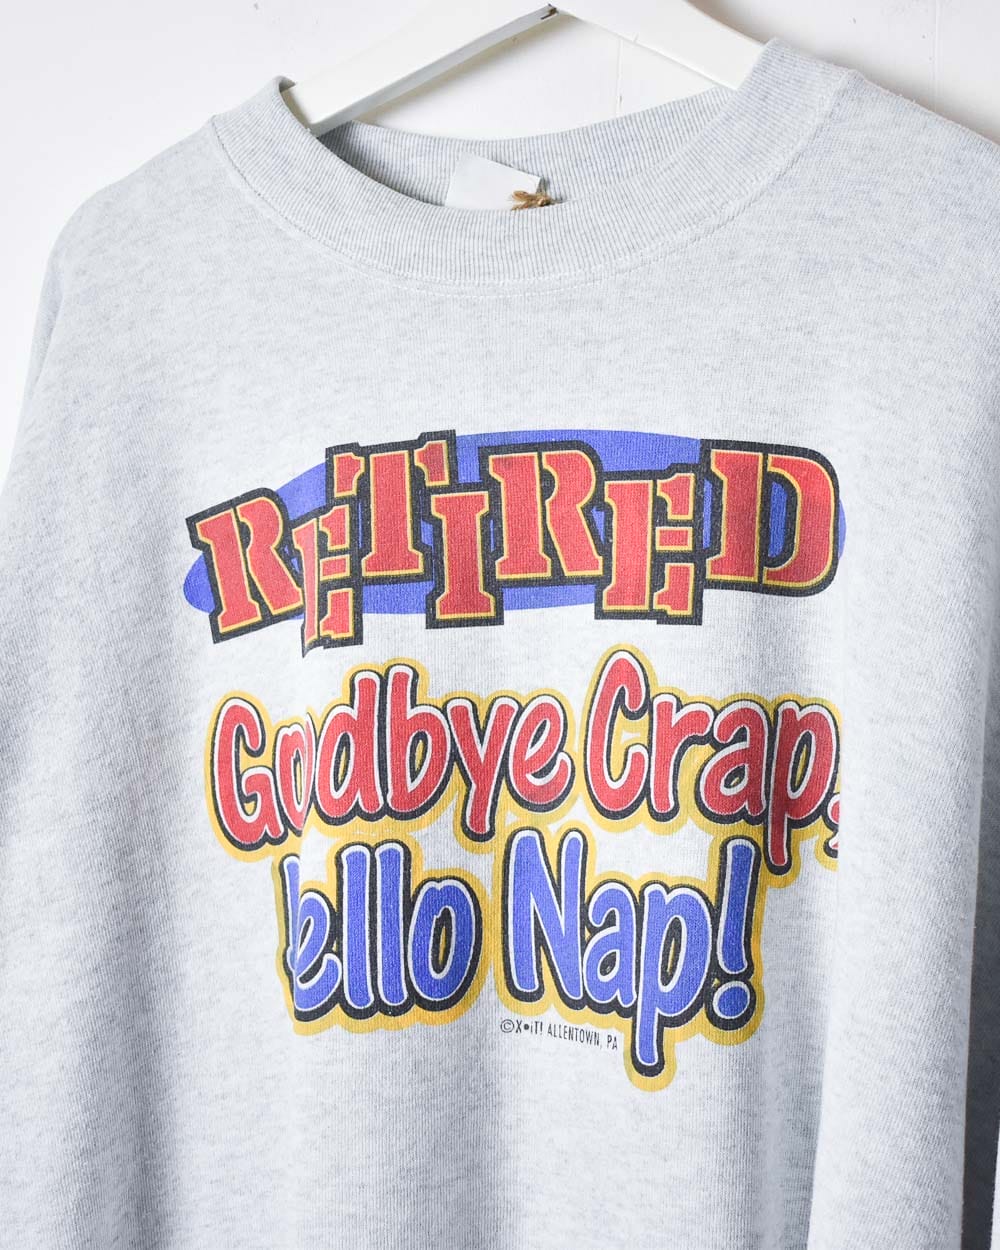 Stone Retired Goodbye Crap Hello Nap Sweatshirt - XX-Large